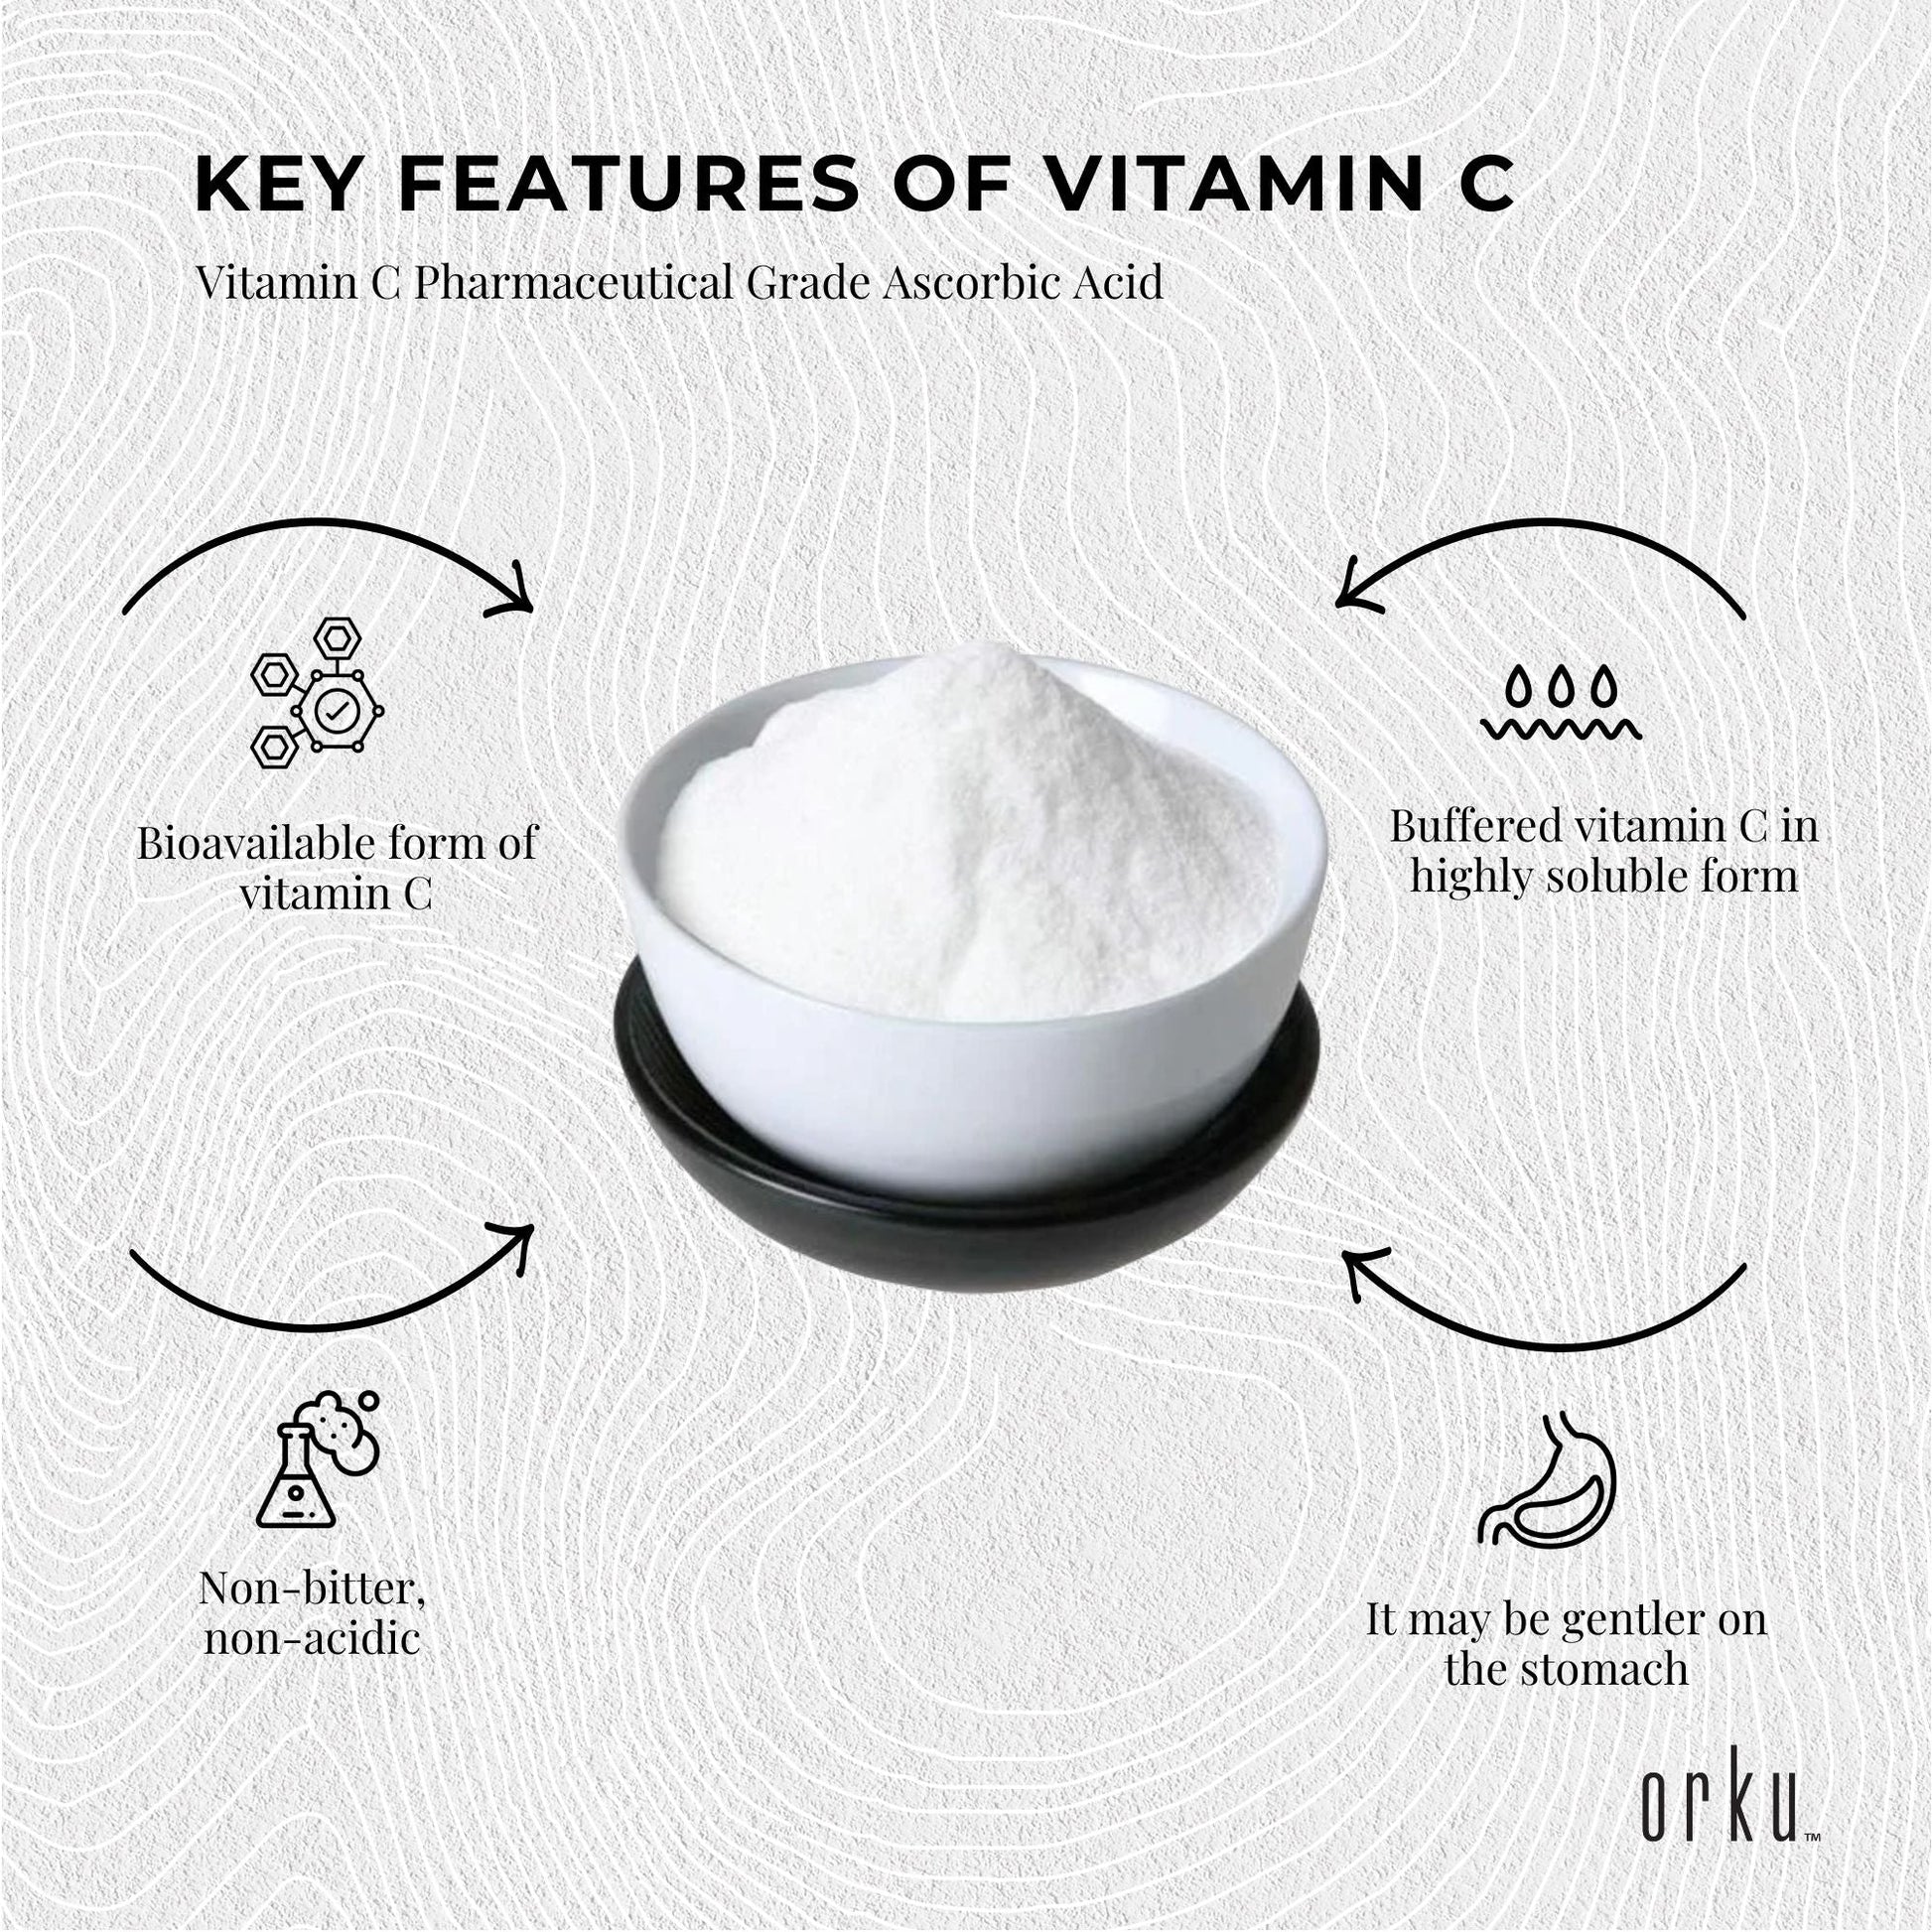 2Kg Sodium Ascorbate Powder - Vitamin C Buffered Pharmaceutical Ascorbic Acid